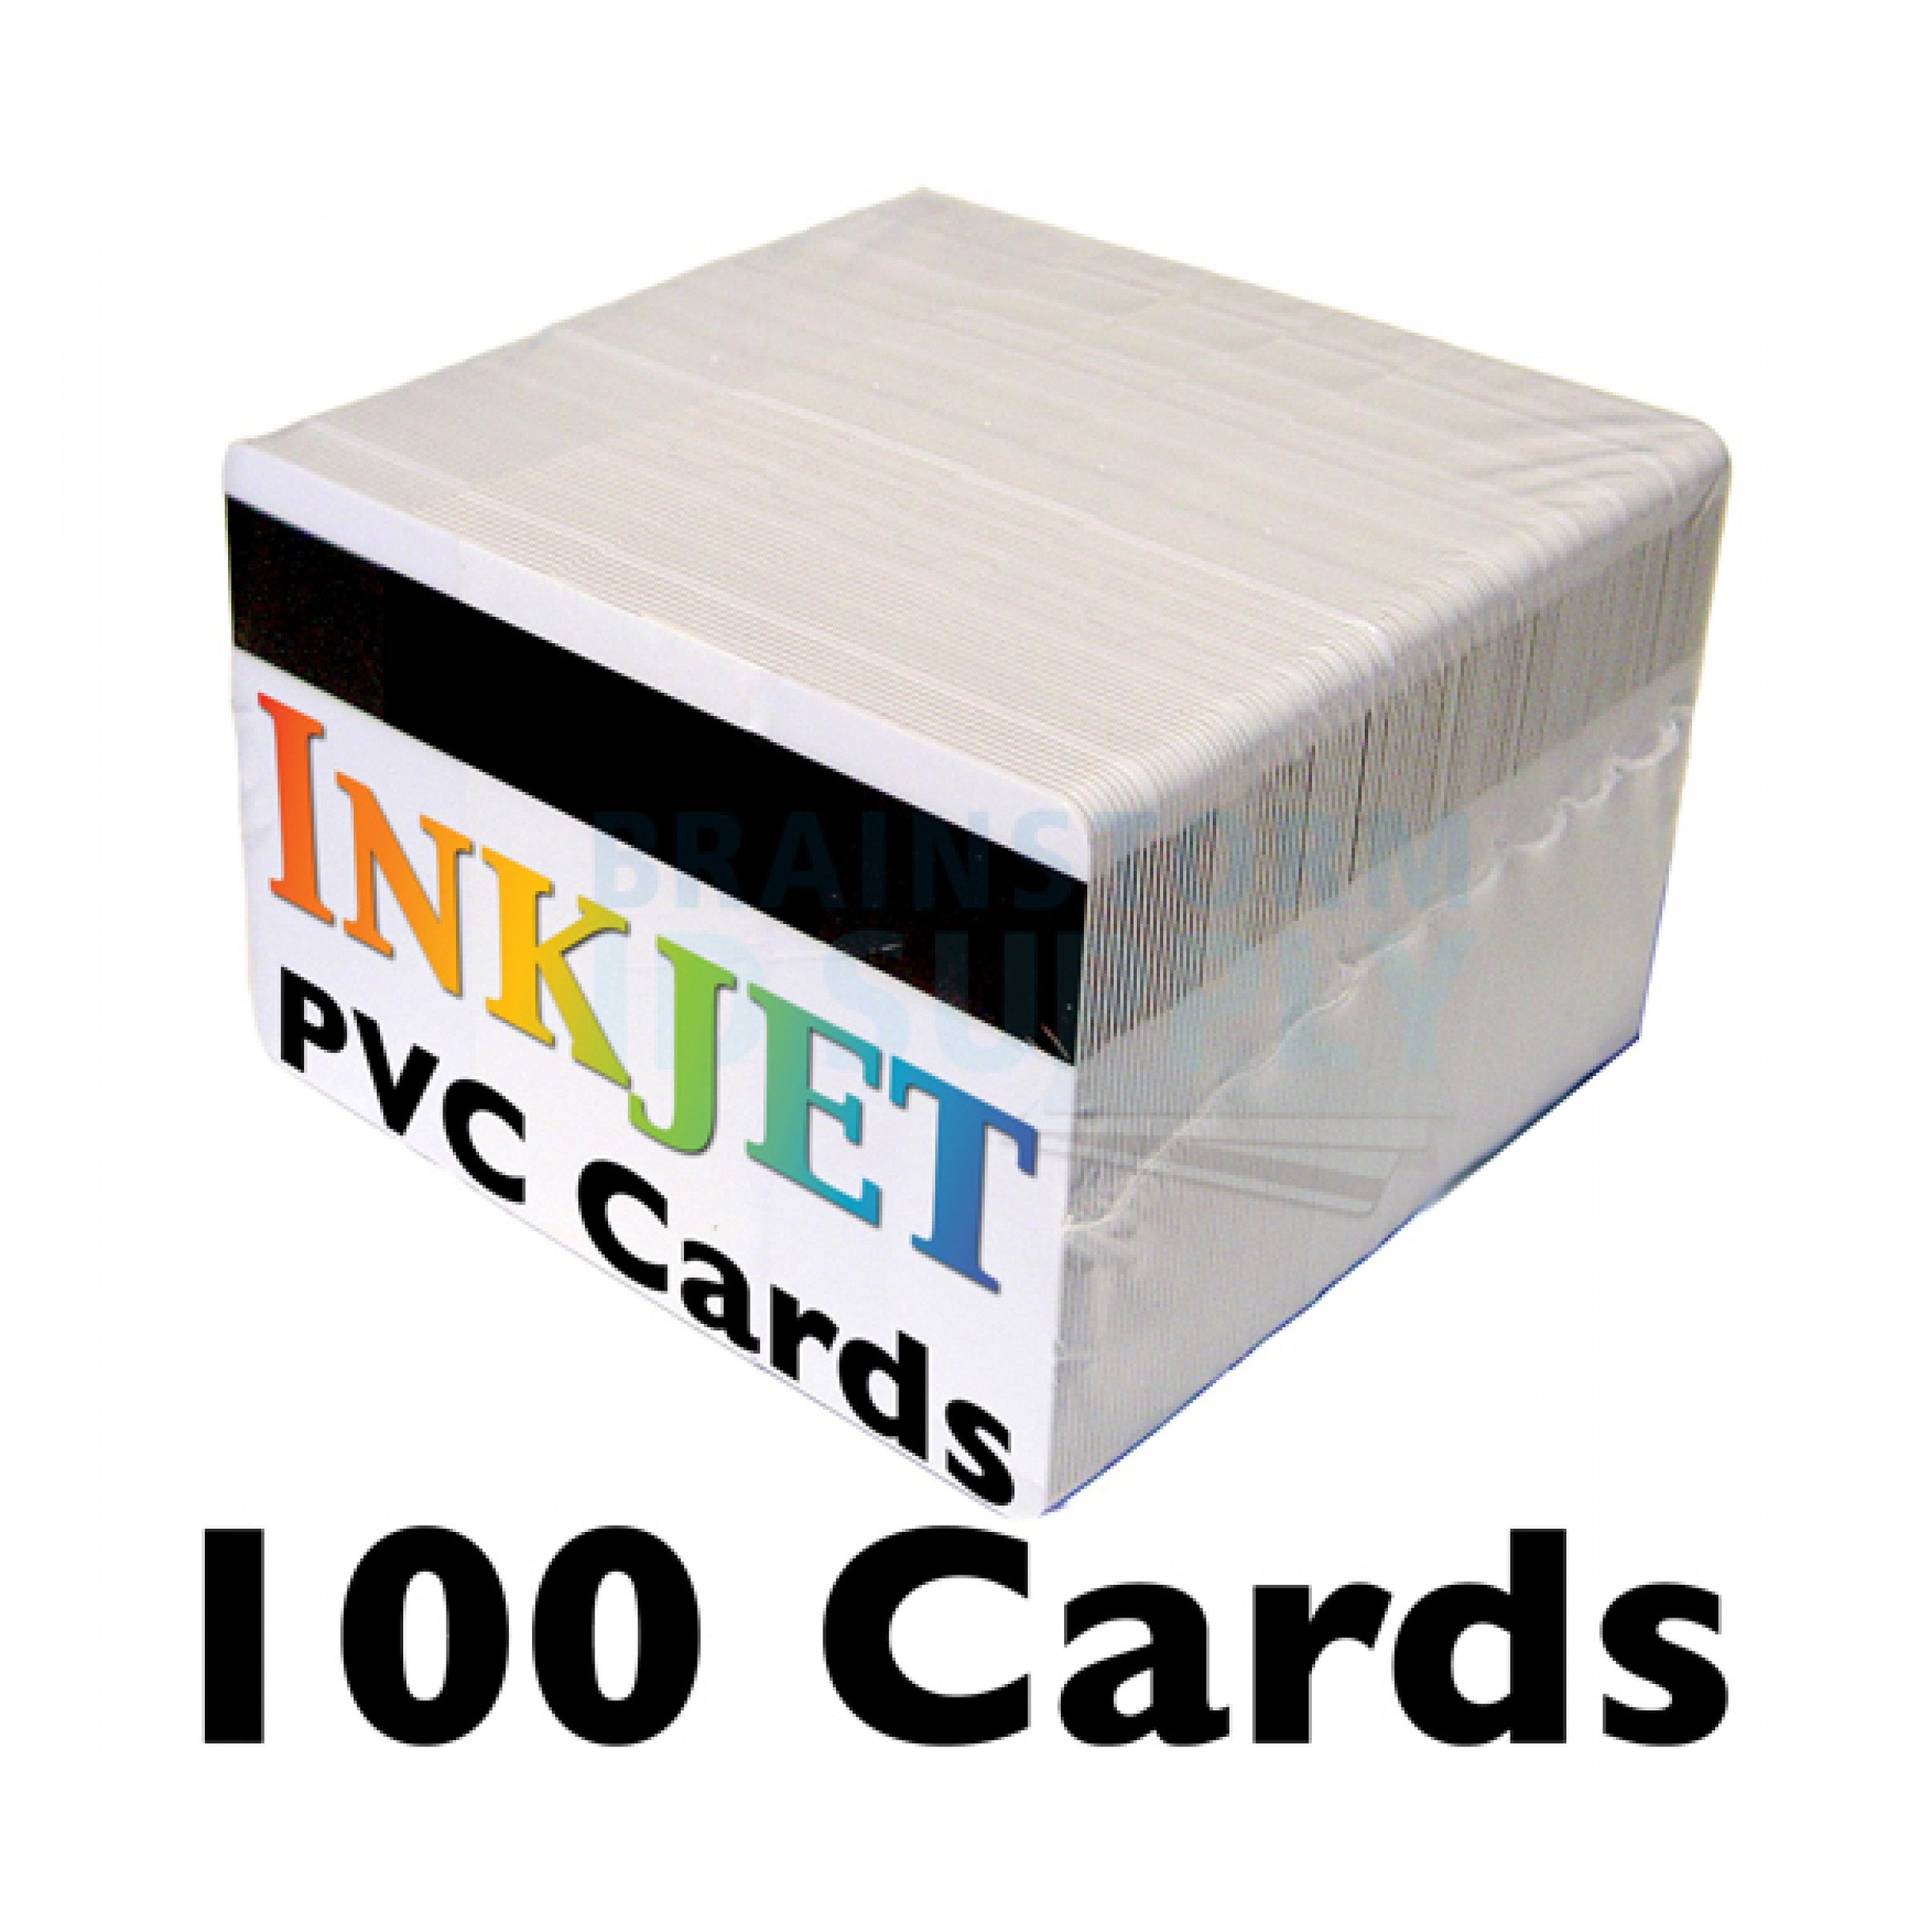 PVC Card Printing Kit - Includes Printer, 100 PVC Cards, and Printing Tray